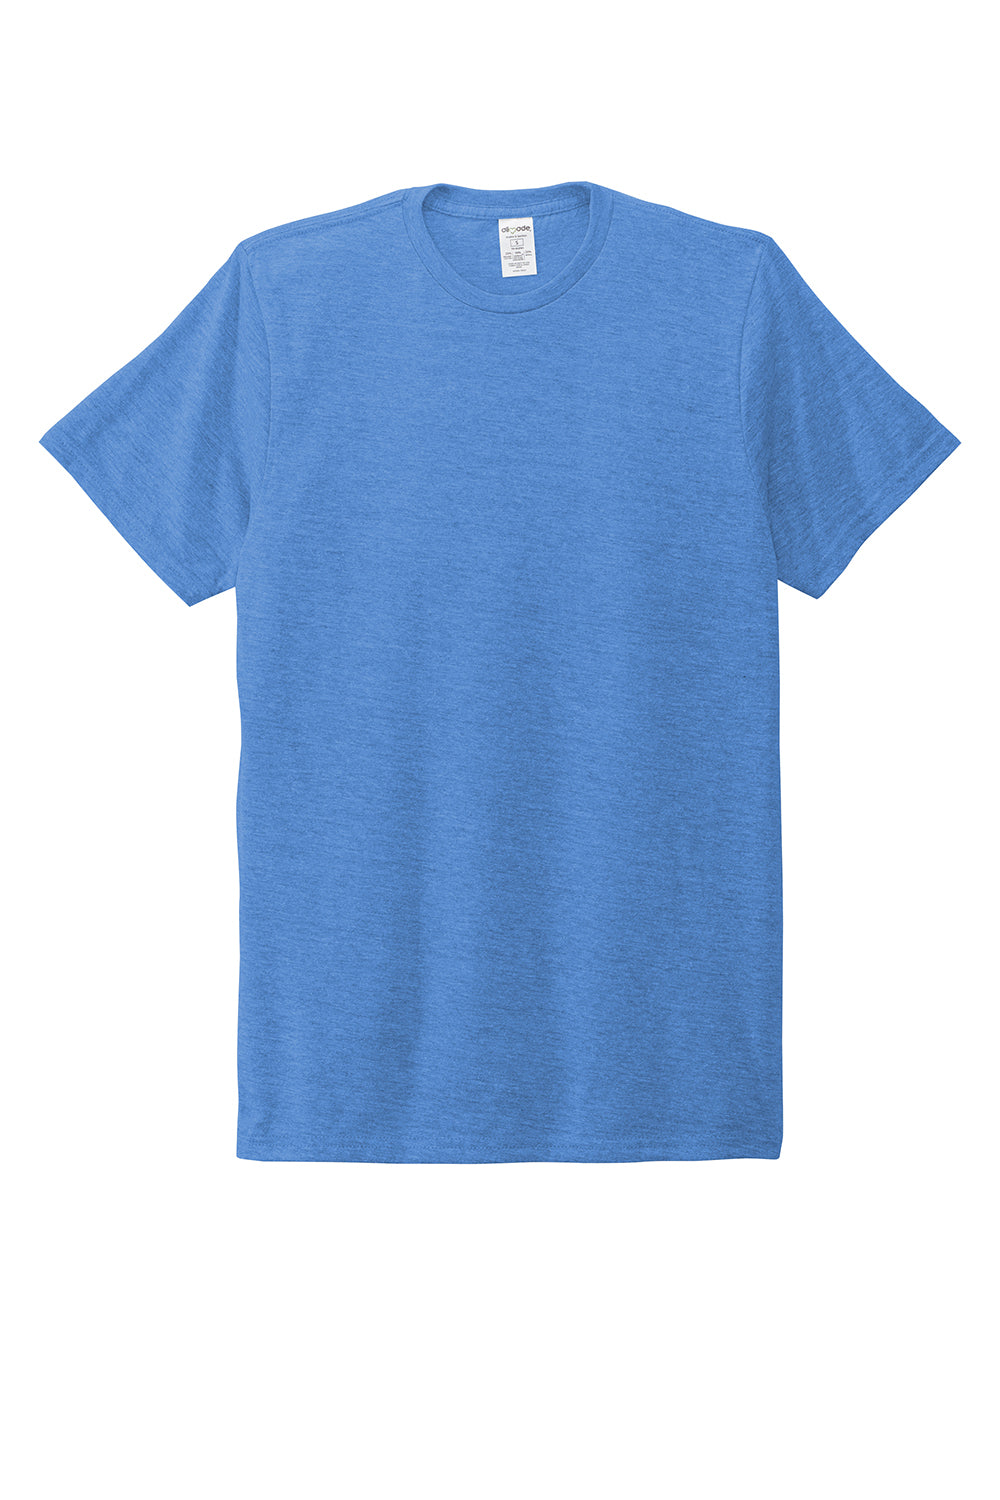 Allmade AL2004 Mens Short Sleeve Crewneck T-Shirt Azure Blue Flat Front